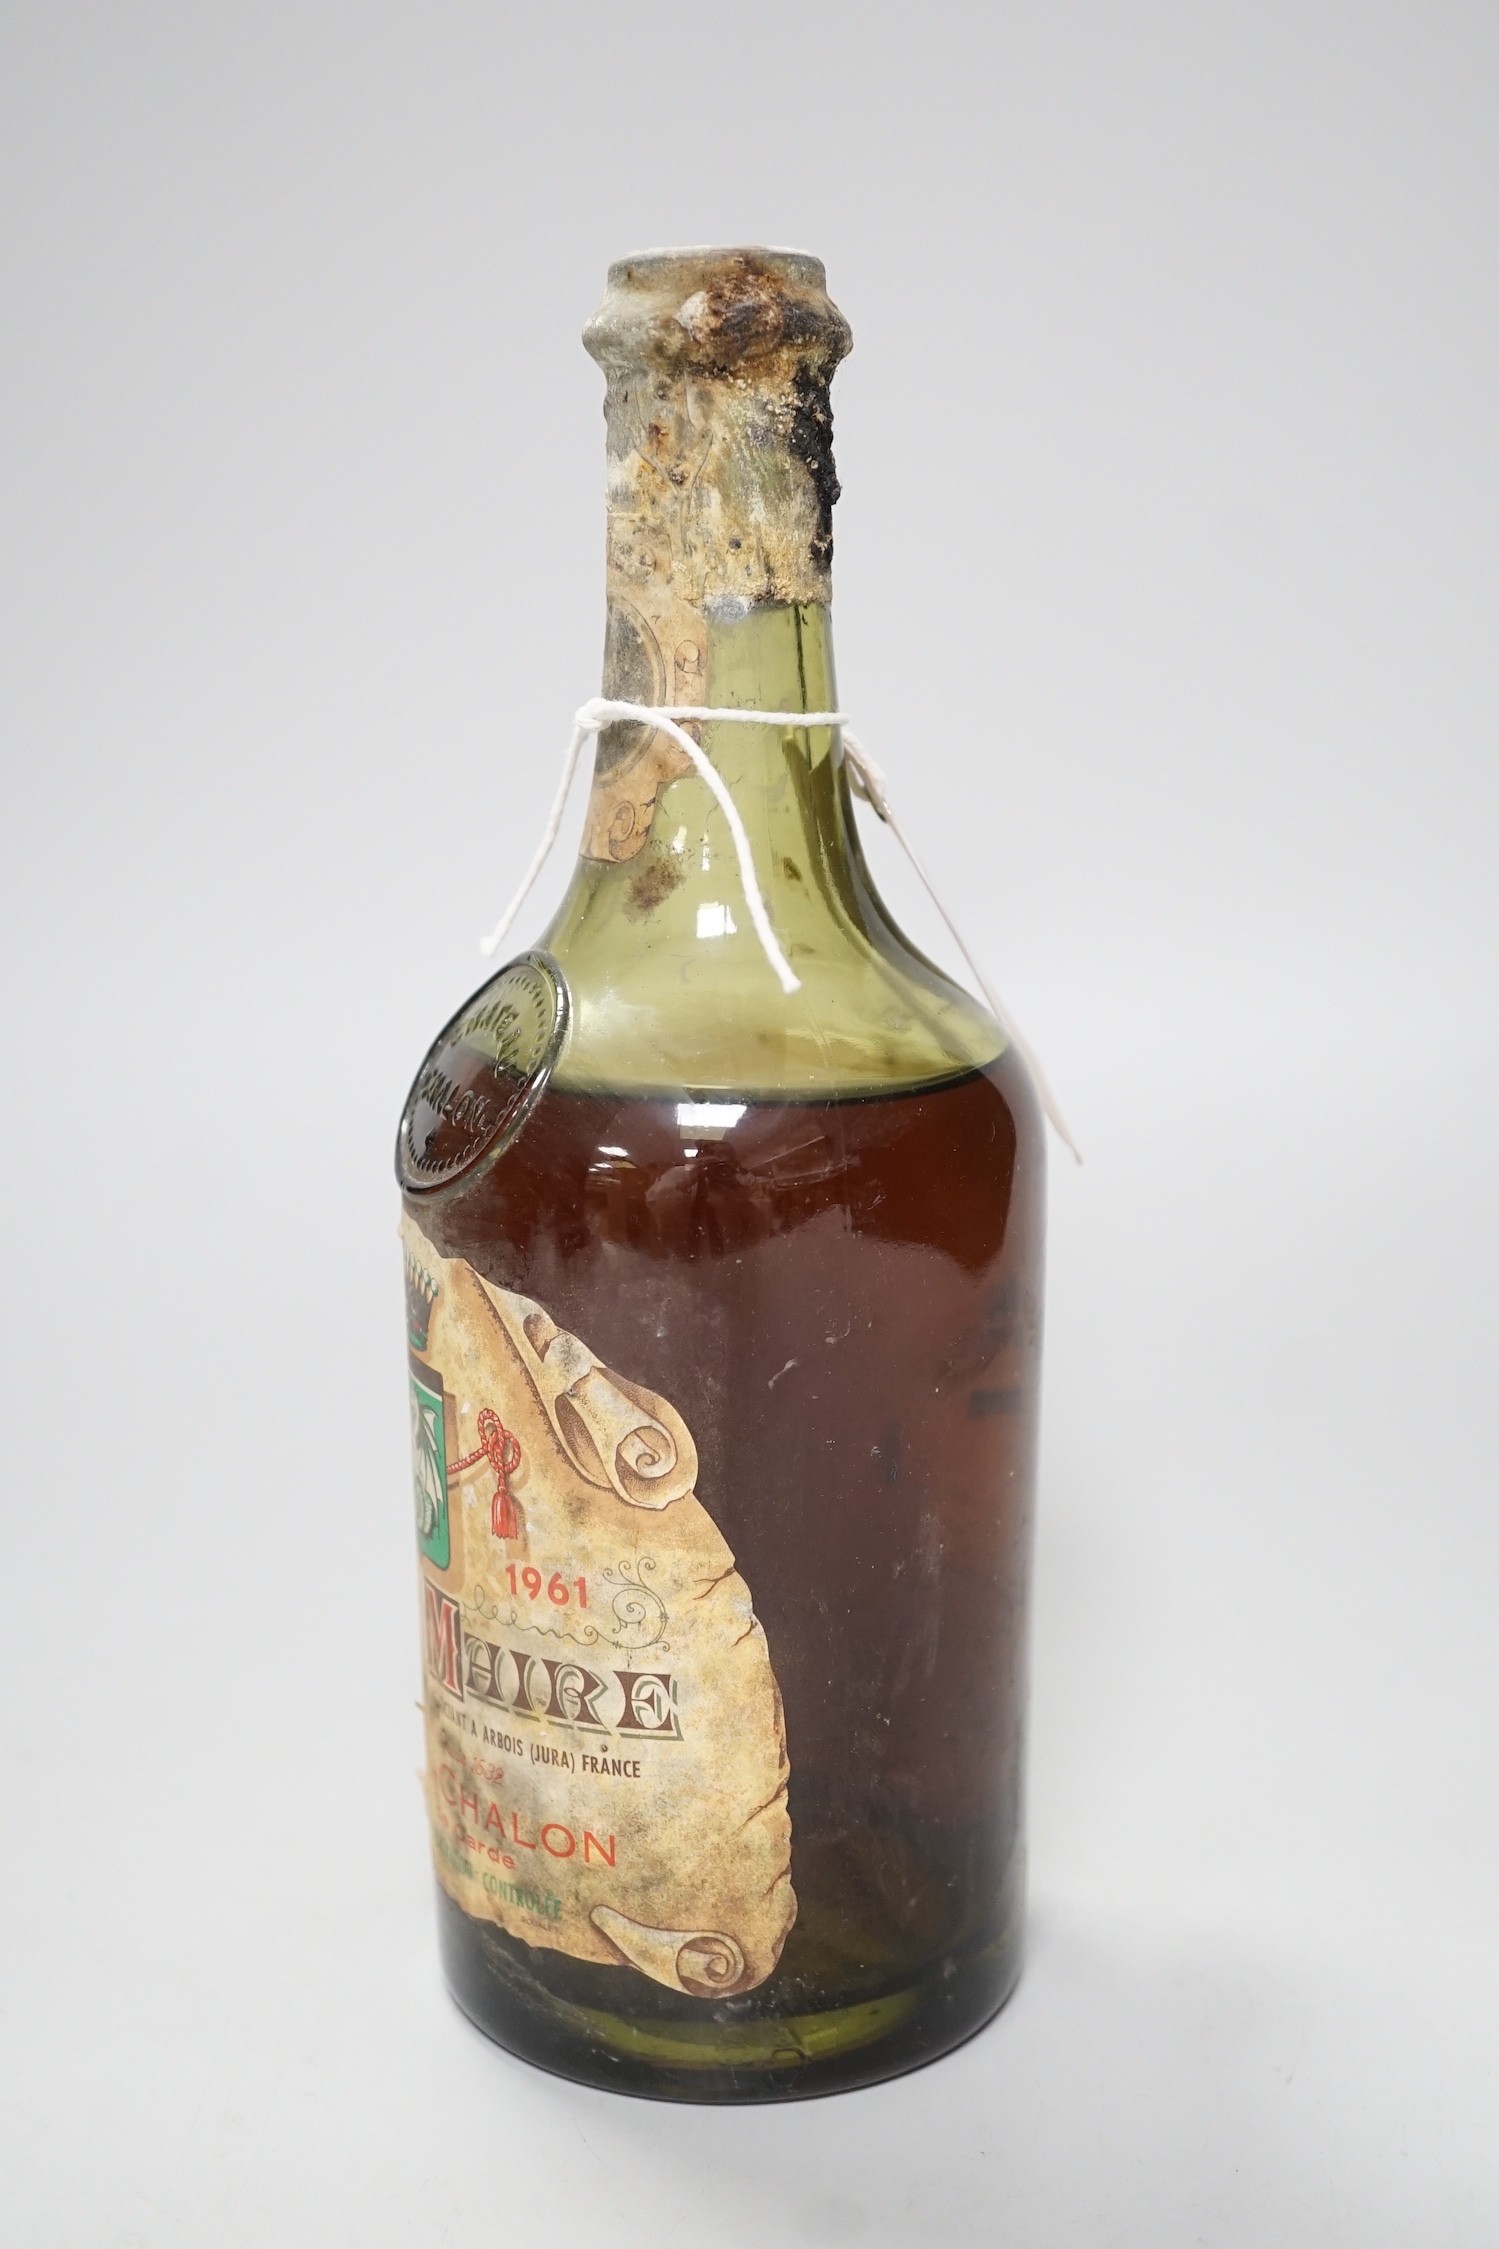 A bottle of 1961 Henri Maire Chateau-Chalon